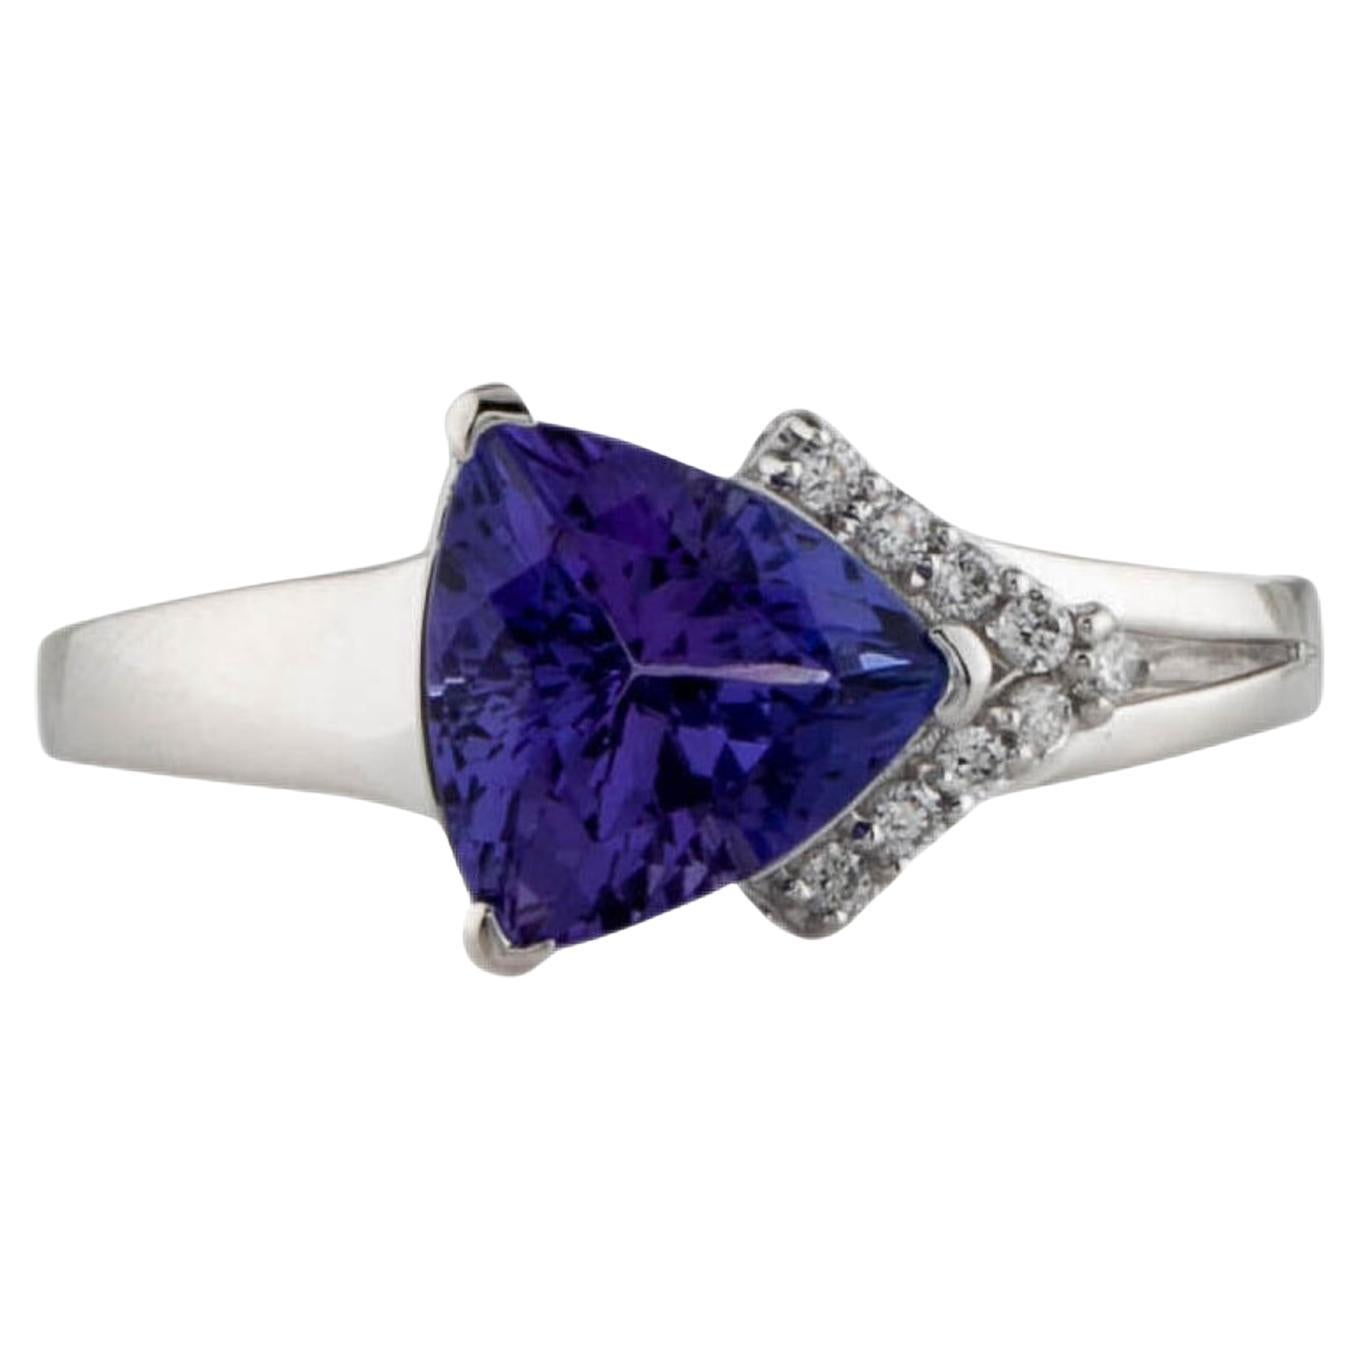 Luxurious 14K Tanzanite & Diamond Cocktail Ring, Size 7.25 - Statement Jewelry